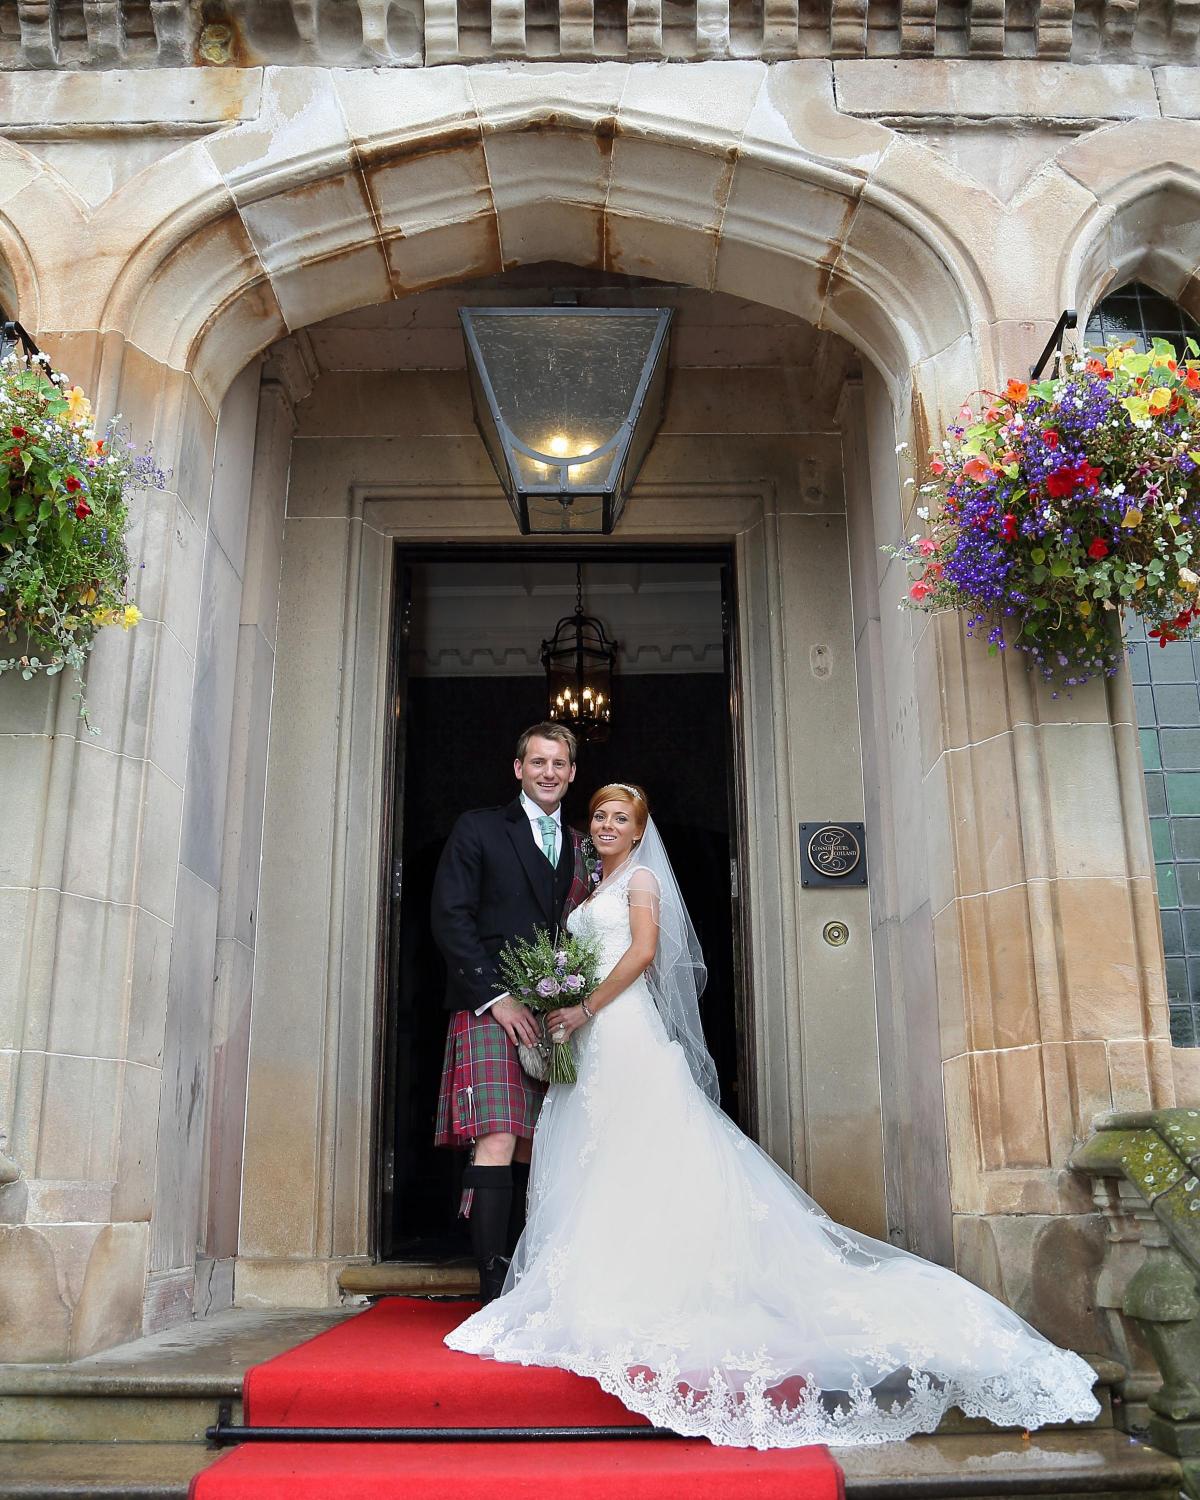 Jillian Wilson, Guiltreehill Farm, Kirkmichael, married Struan Grant, Prestwick at Alloway Parish Church followed by Cameron House, Loch Lomond Photo: Adore Weddings